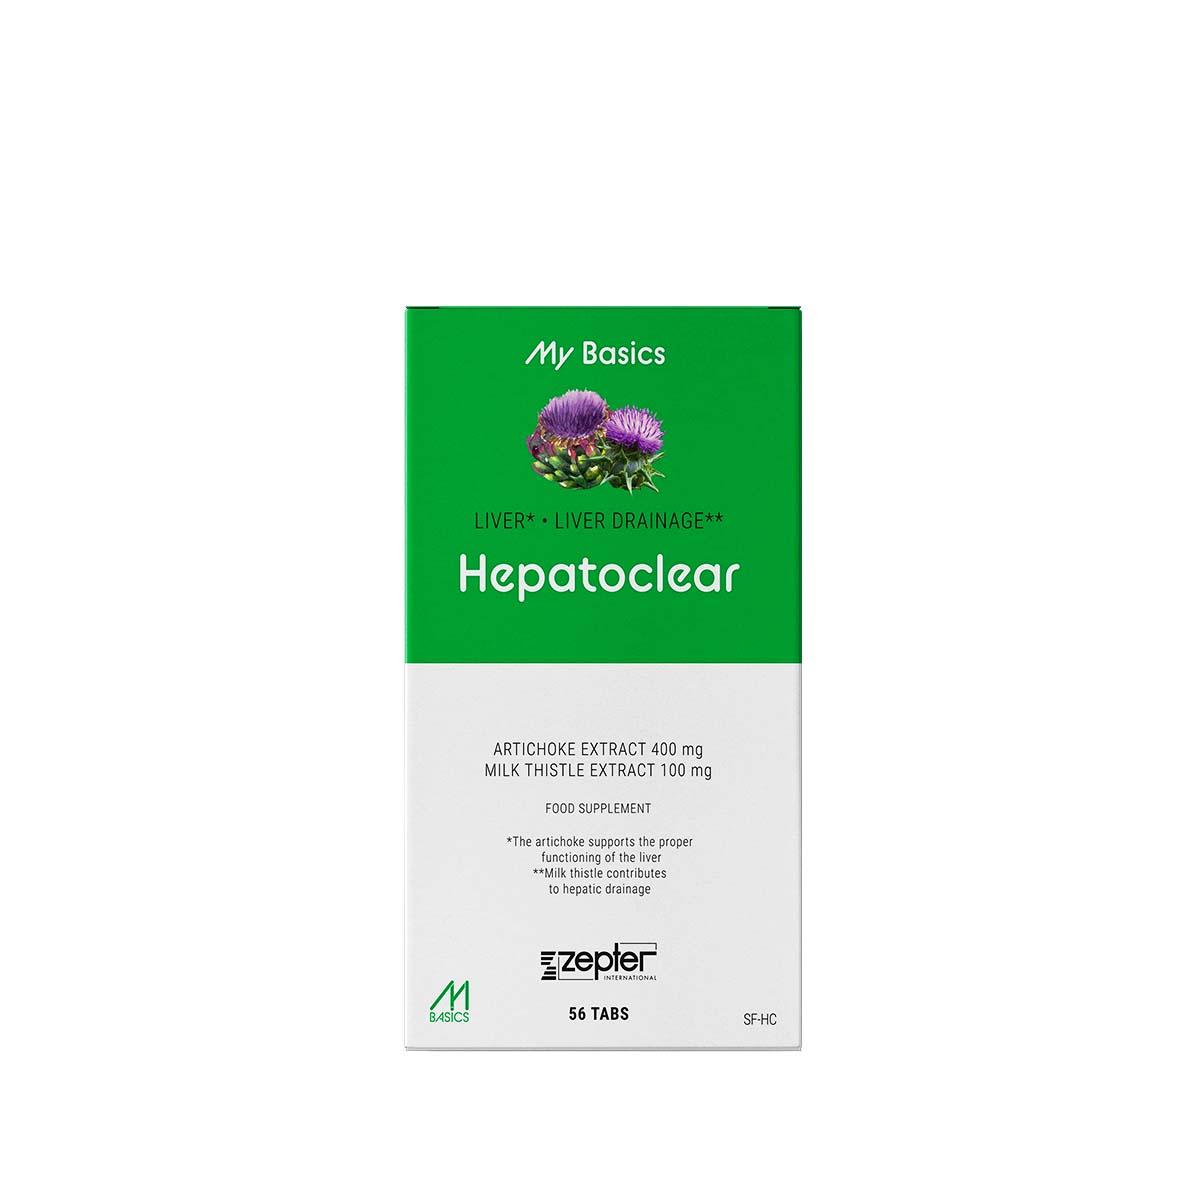 Selected image for MYBASICS ZEPTER Hepatoclear 56 tableta